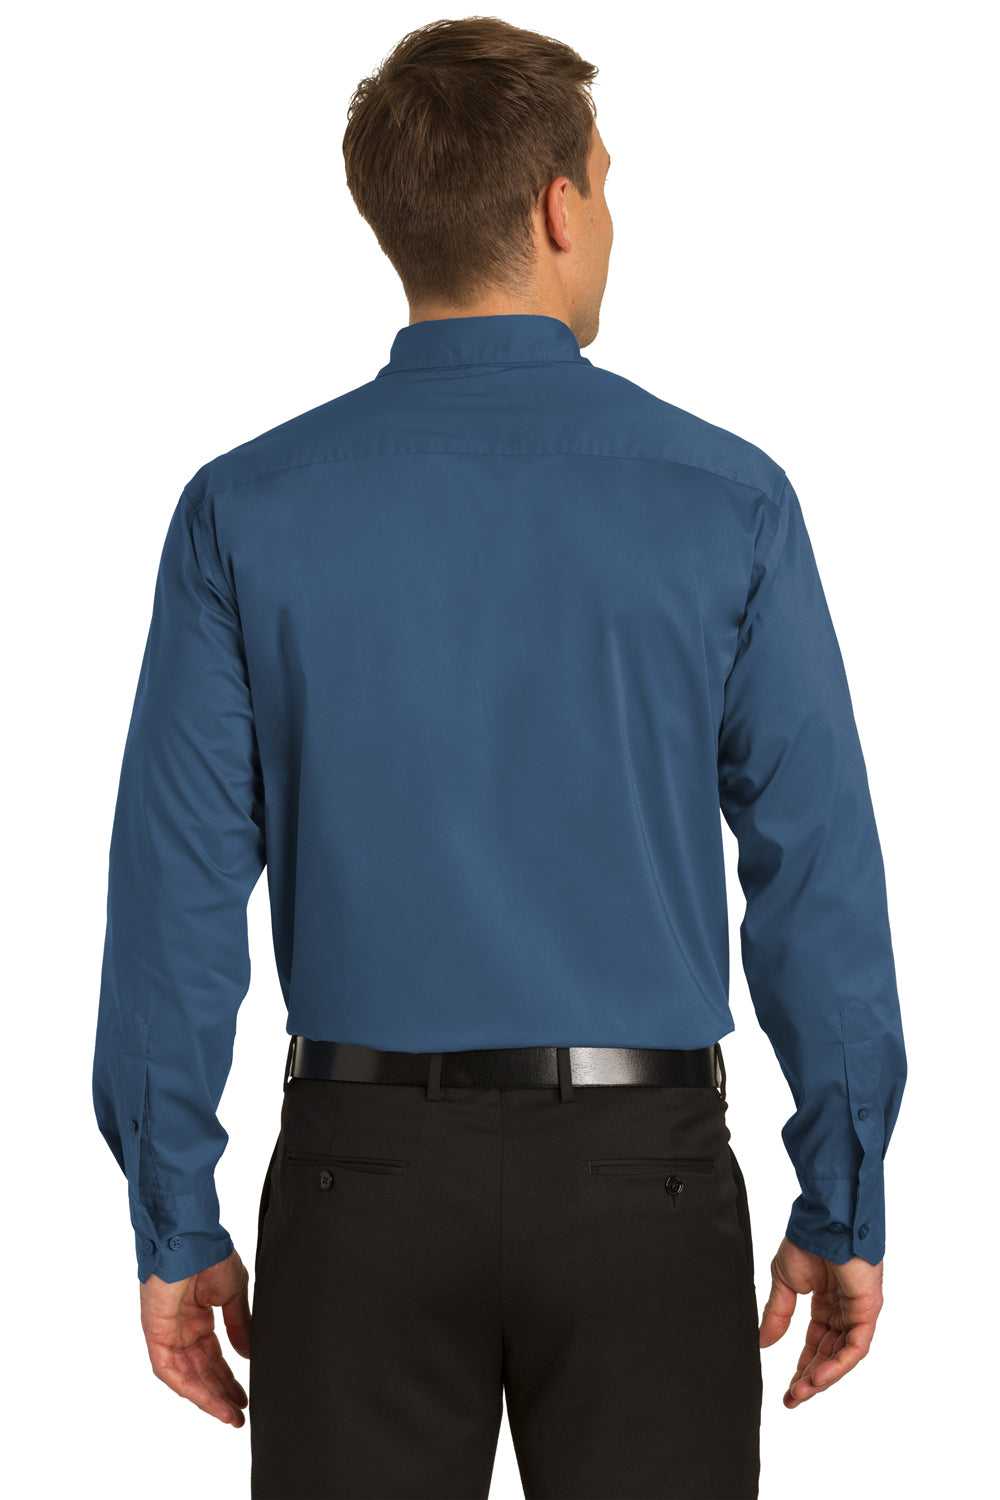 Port Authority S646 Mens Long Sleeve Button Down Shirt Moonlight Blue Back